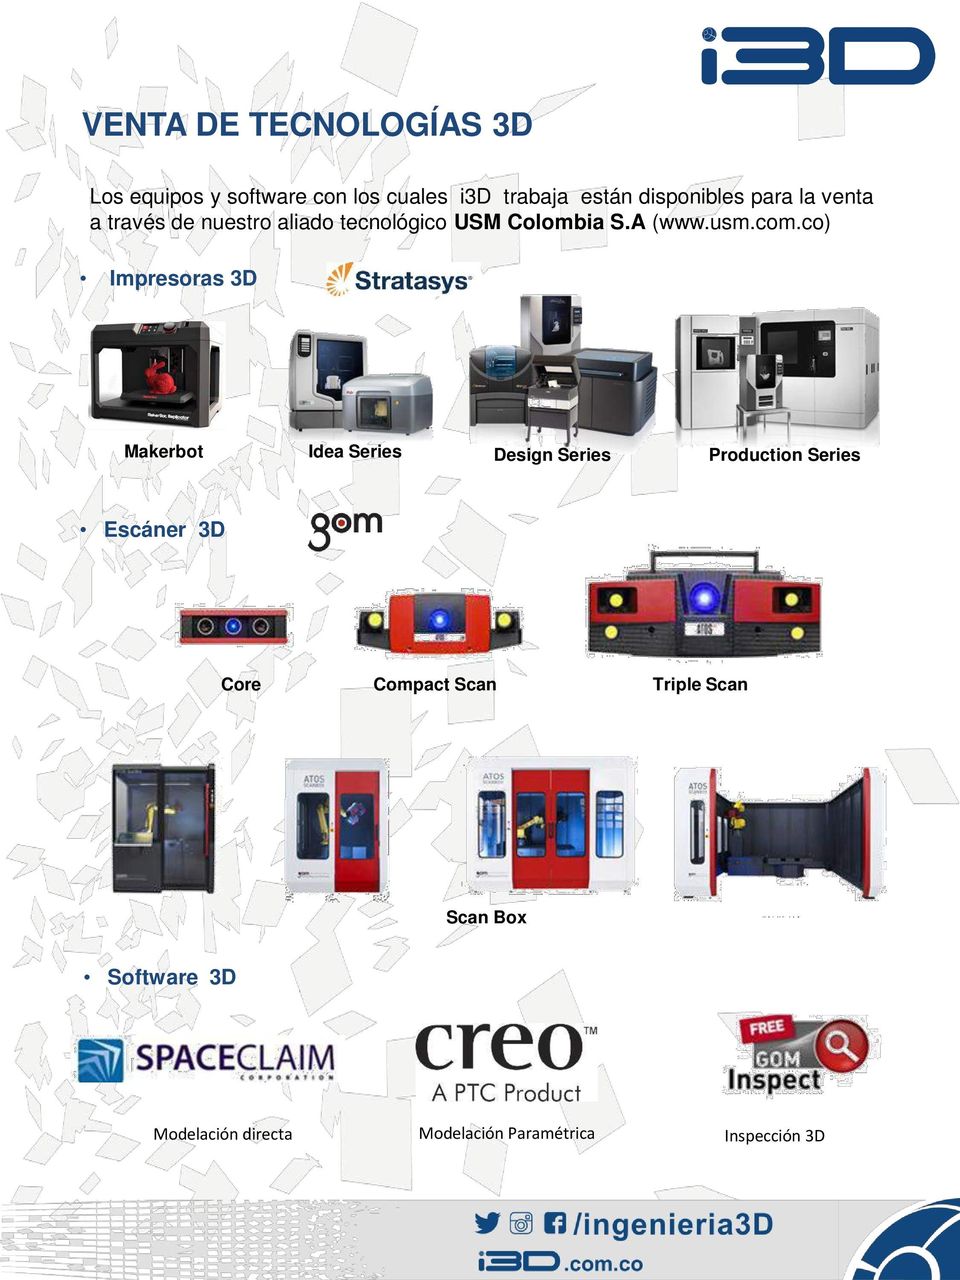 com.co) Impresoras 3D Makerbot Idea Series Design Series Production Series Escáner 3D Core